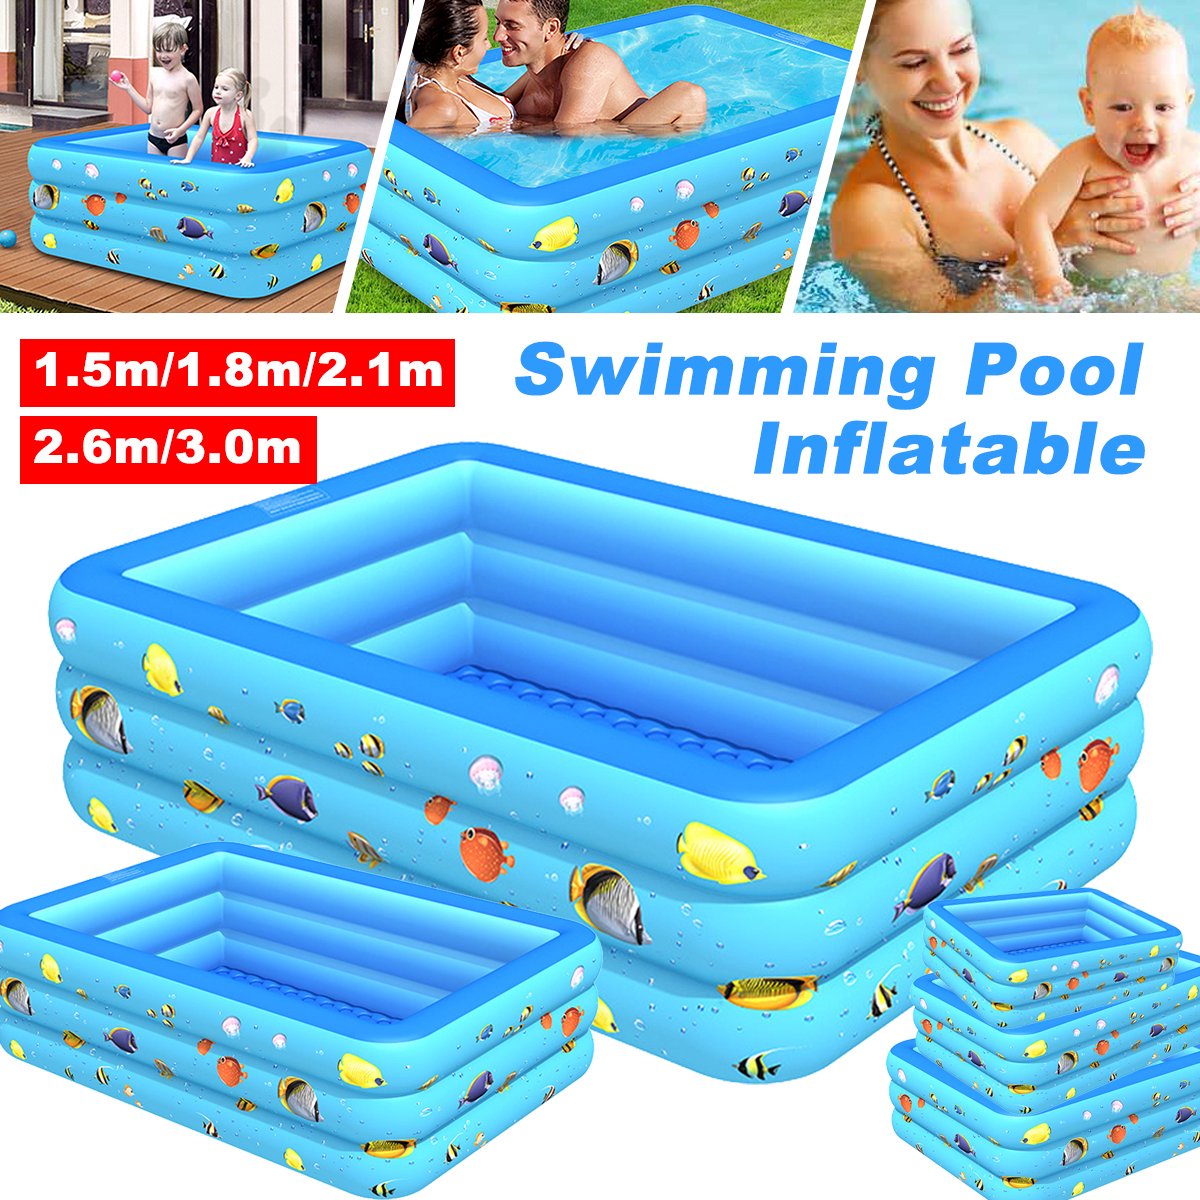 Coolike-Vierkant Opblaasbaar Zwembad-260x180x70 cm-Opblaasbare zwembaden-Familiebad- Kinderzwembad-Opblaaszwembad-blauw